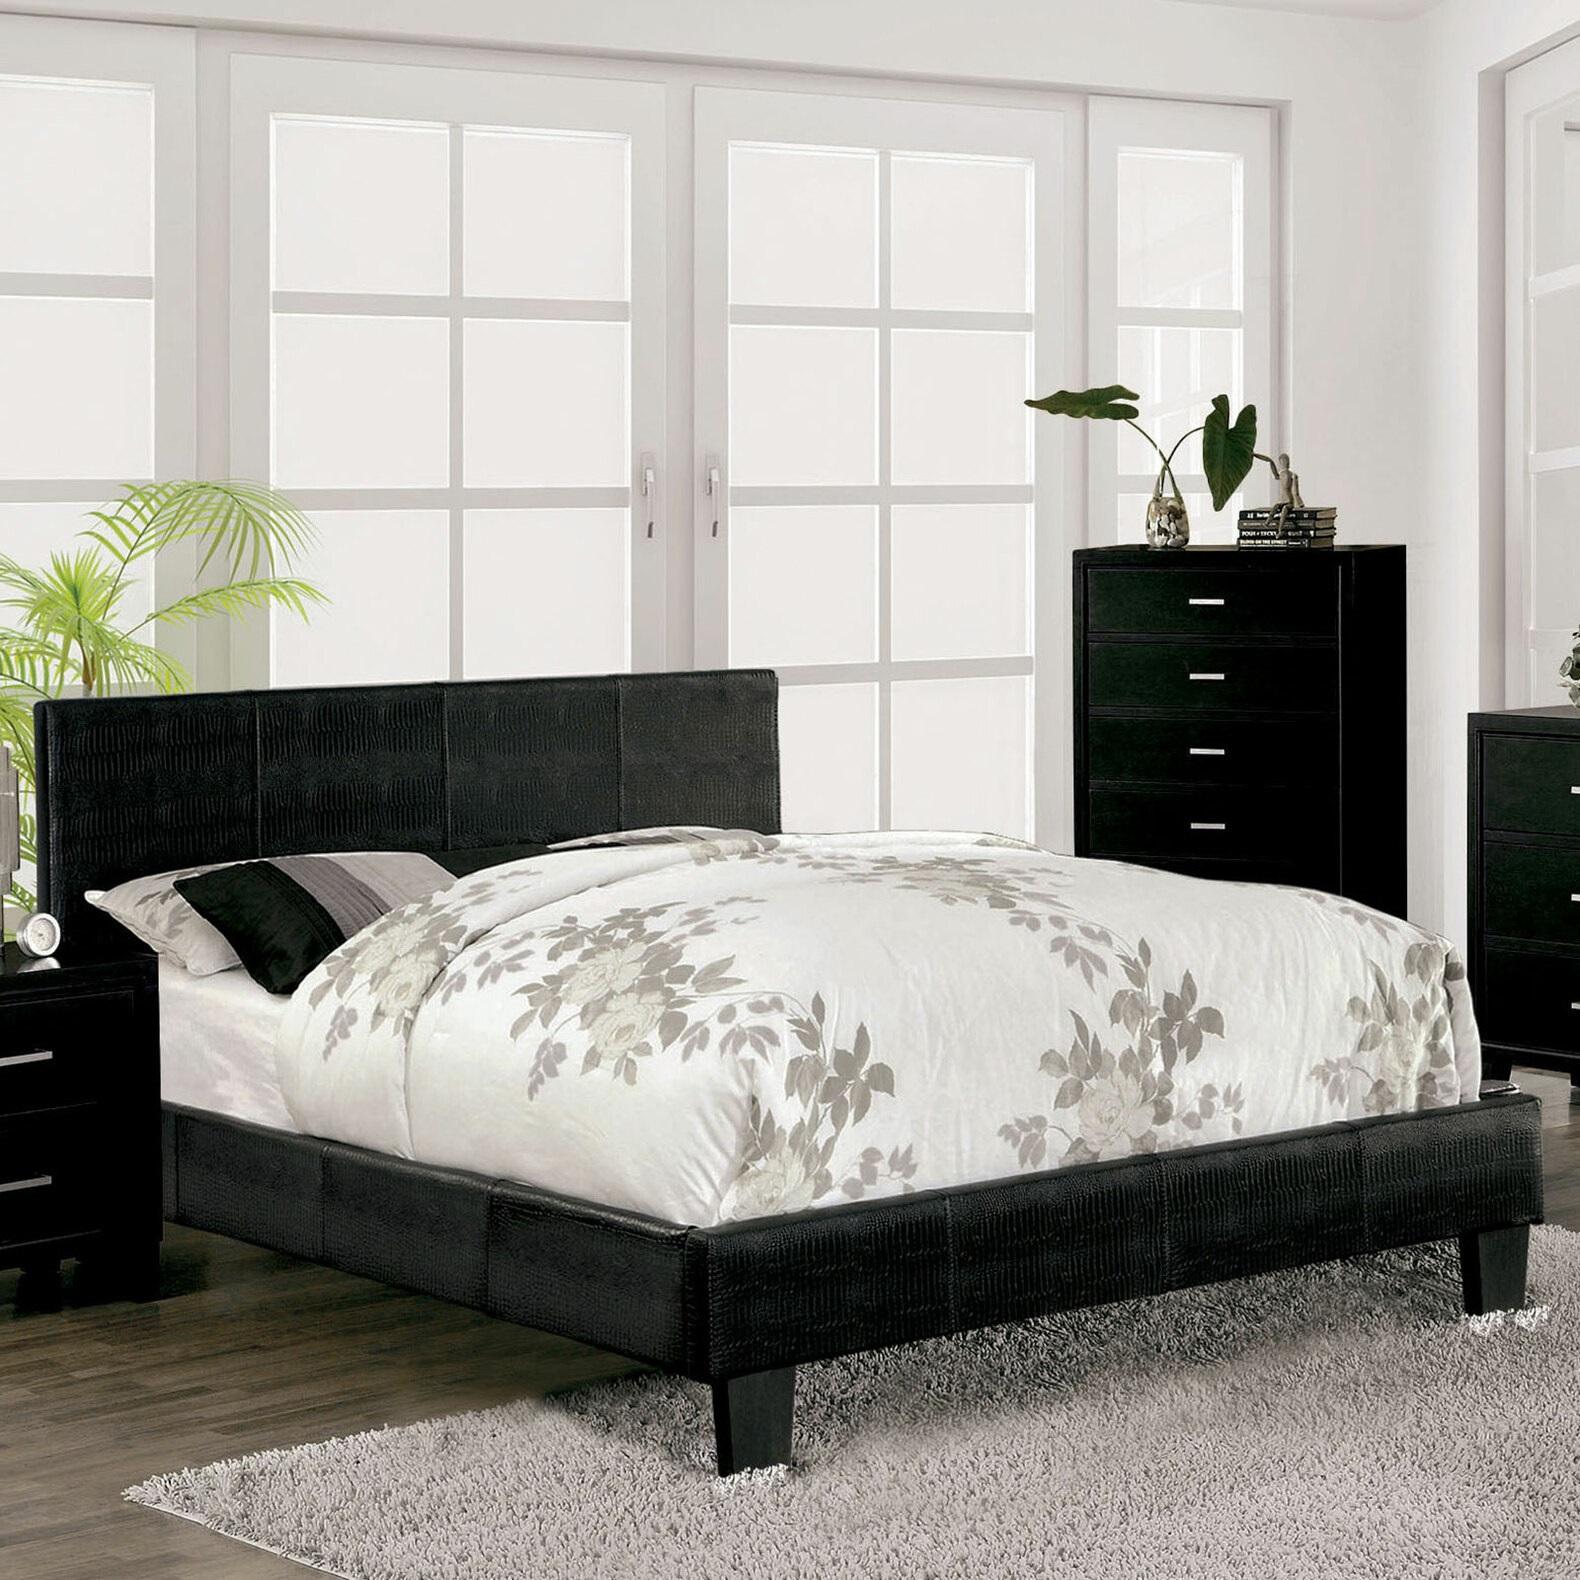 

    
Contemporary Black Solid Wood King Bedroom Set 6pcs Furniture of America CM7793BK-EK Wallen
